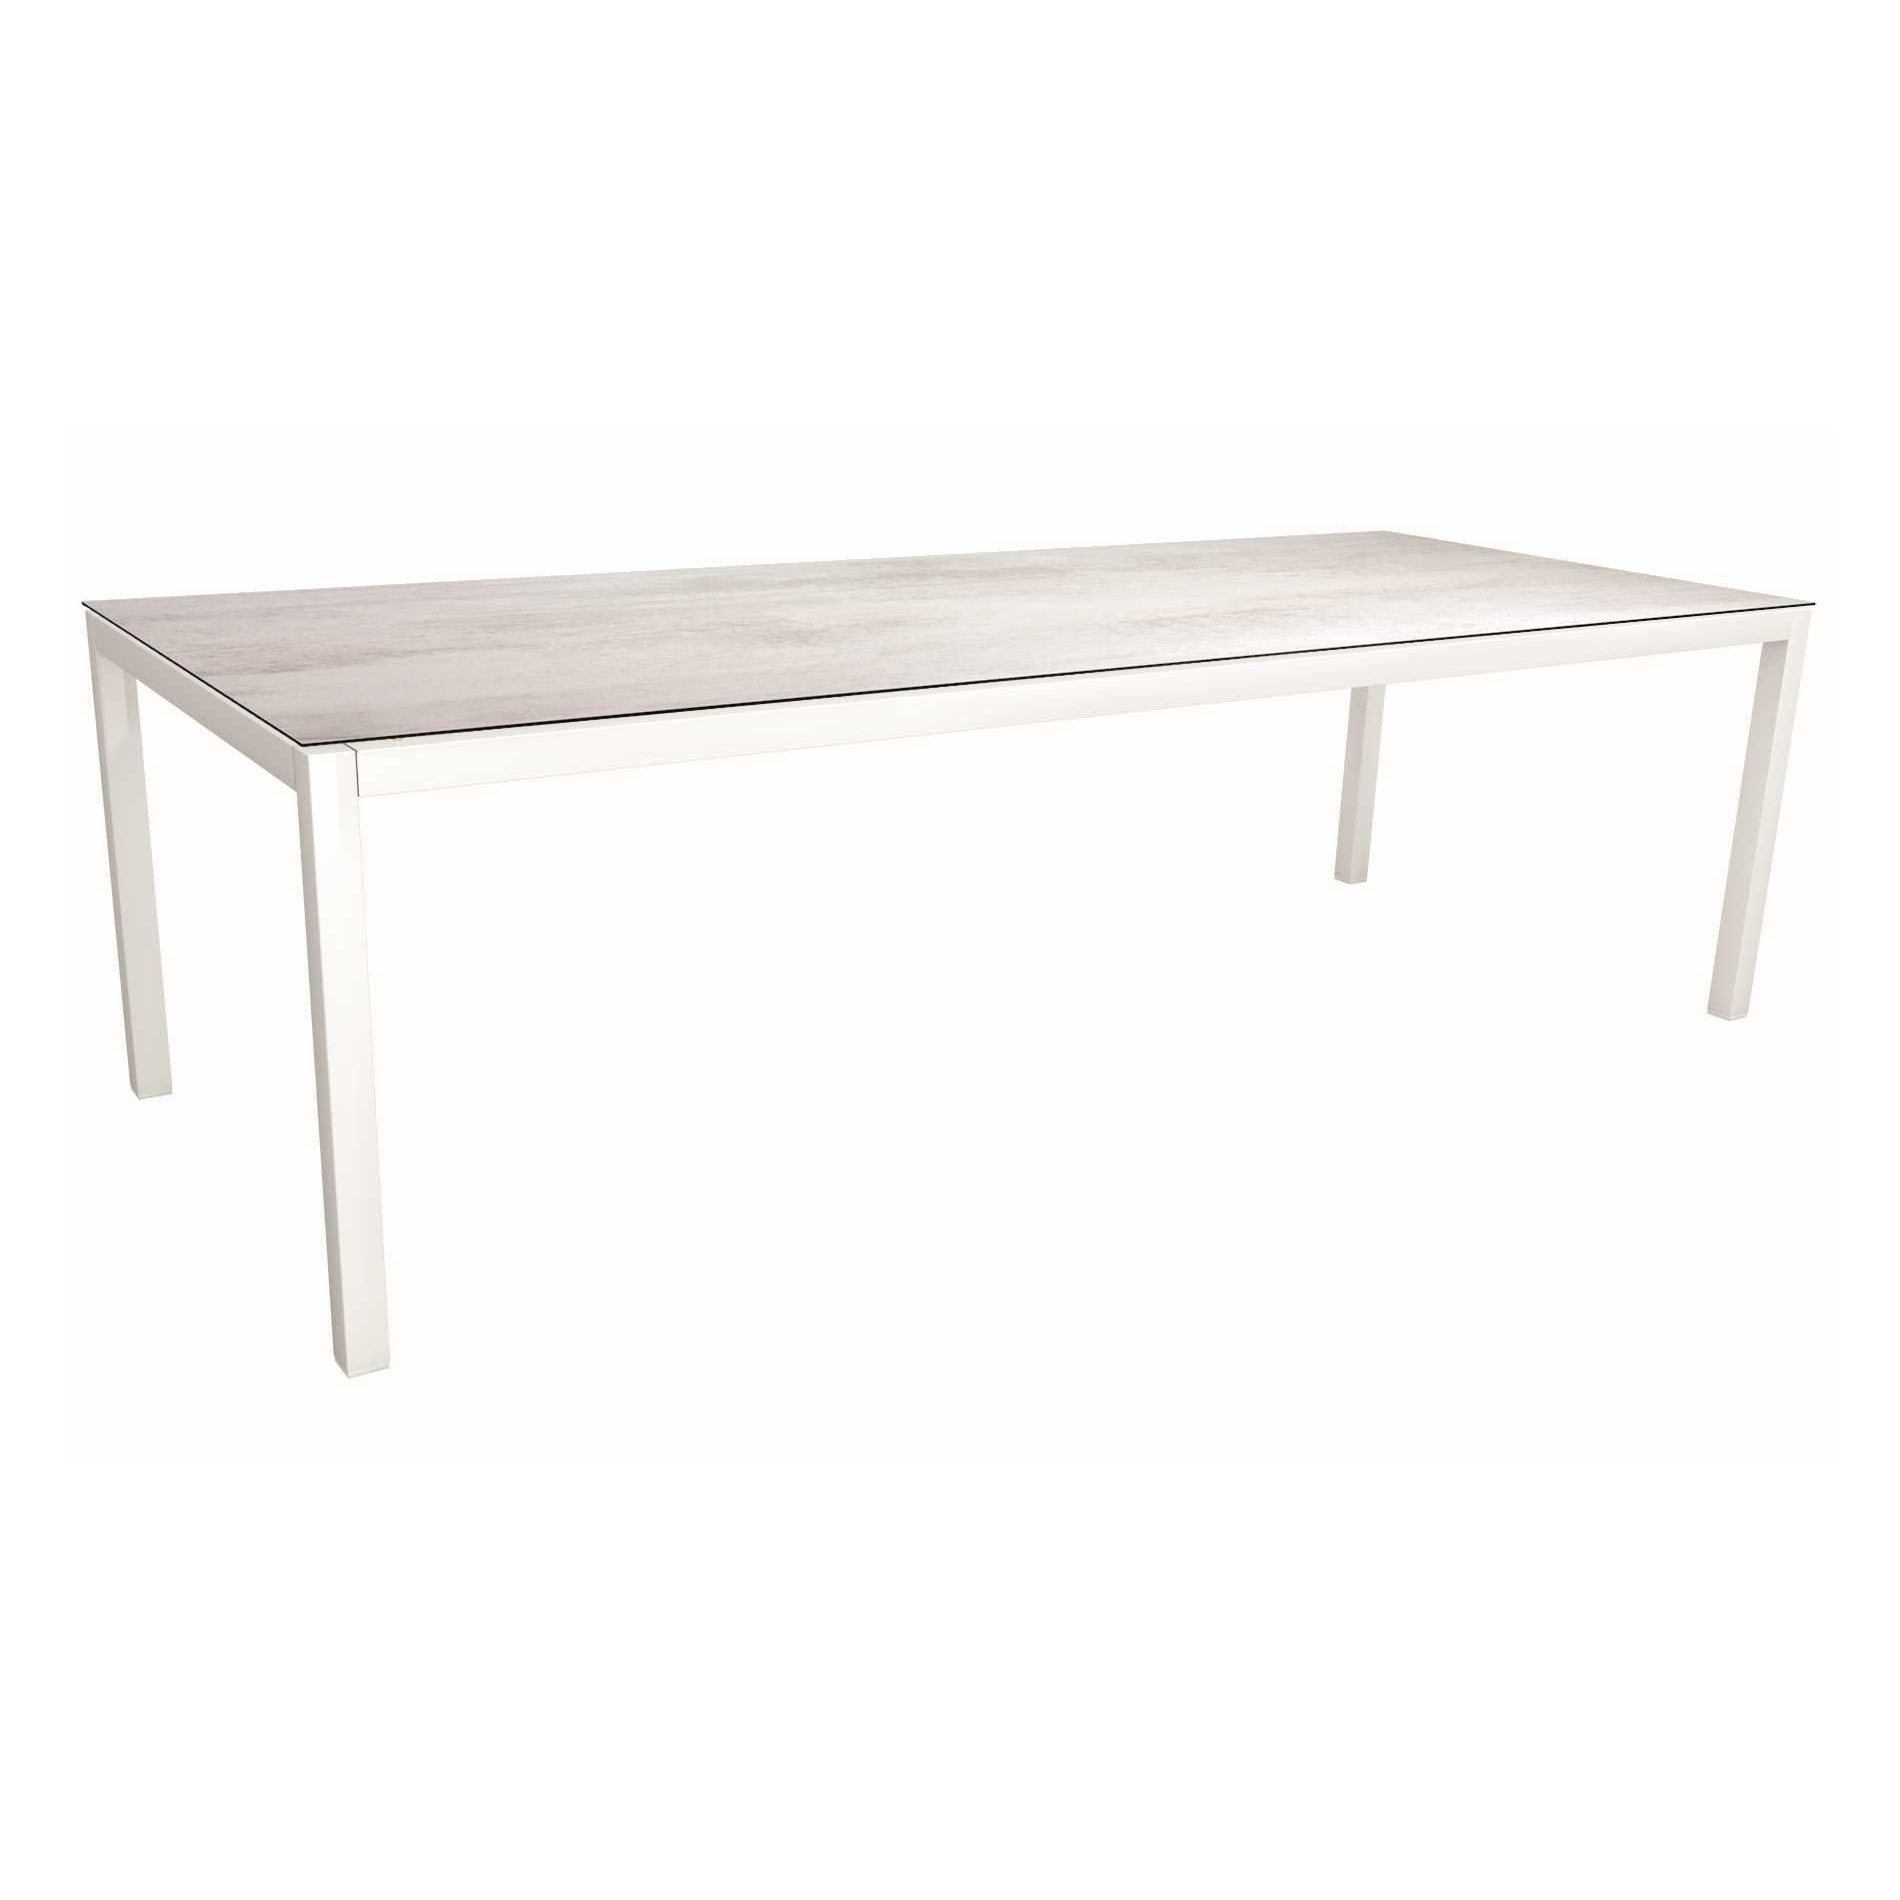 Stern Tischsystem, Gestell Aluminium weiß, Tischplatte HPL Zement hell, Größe: 250x100 cm